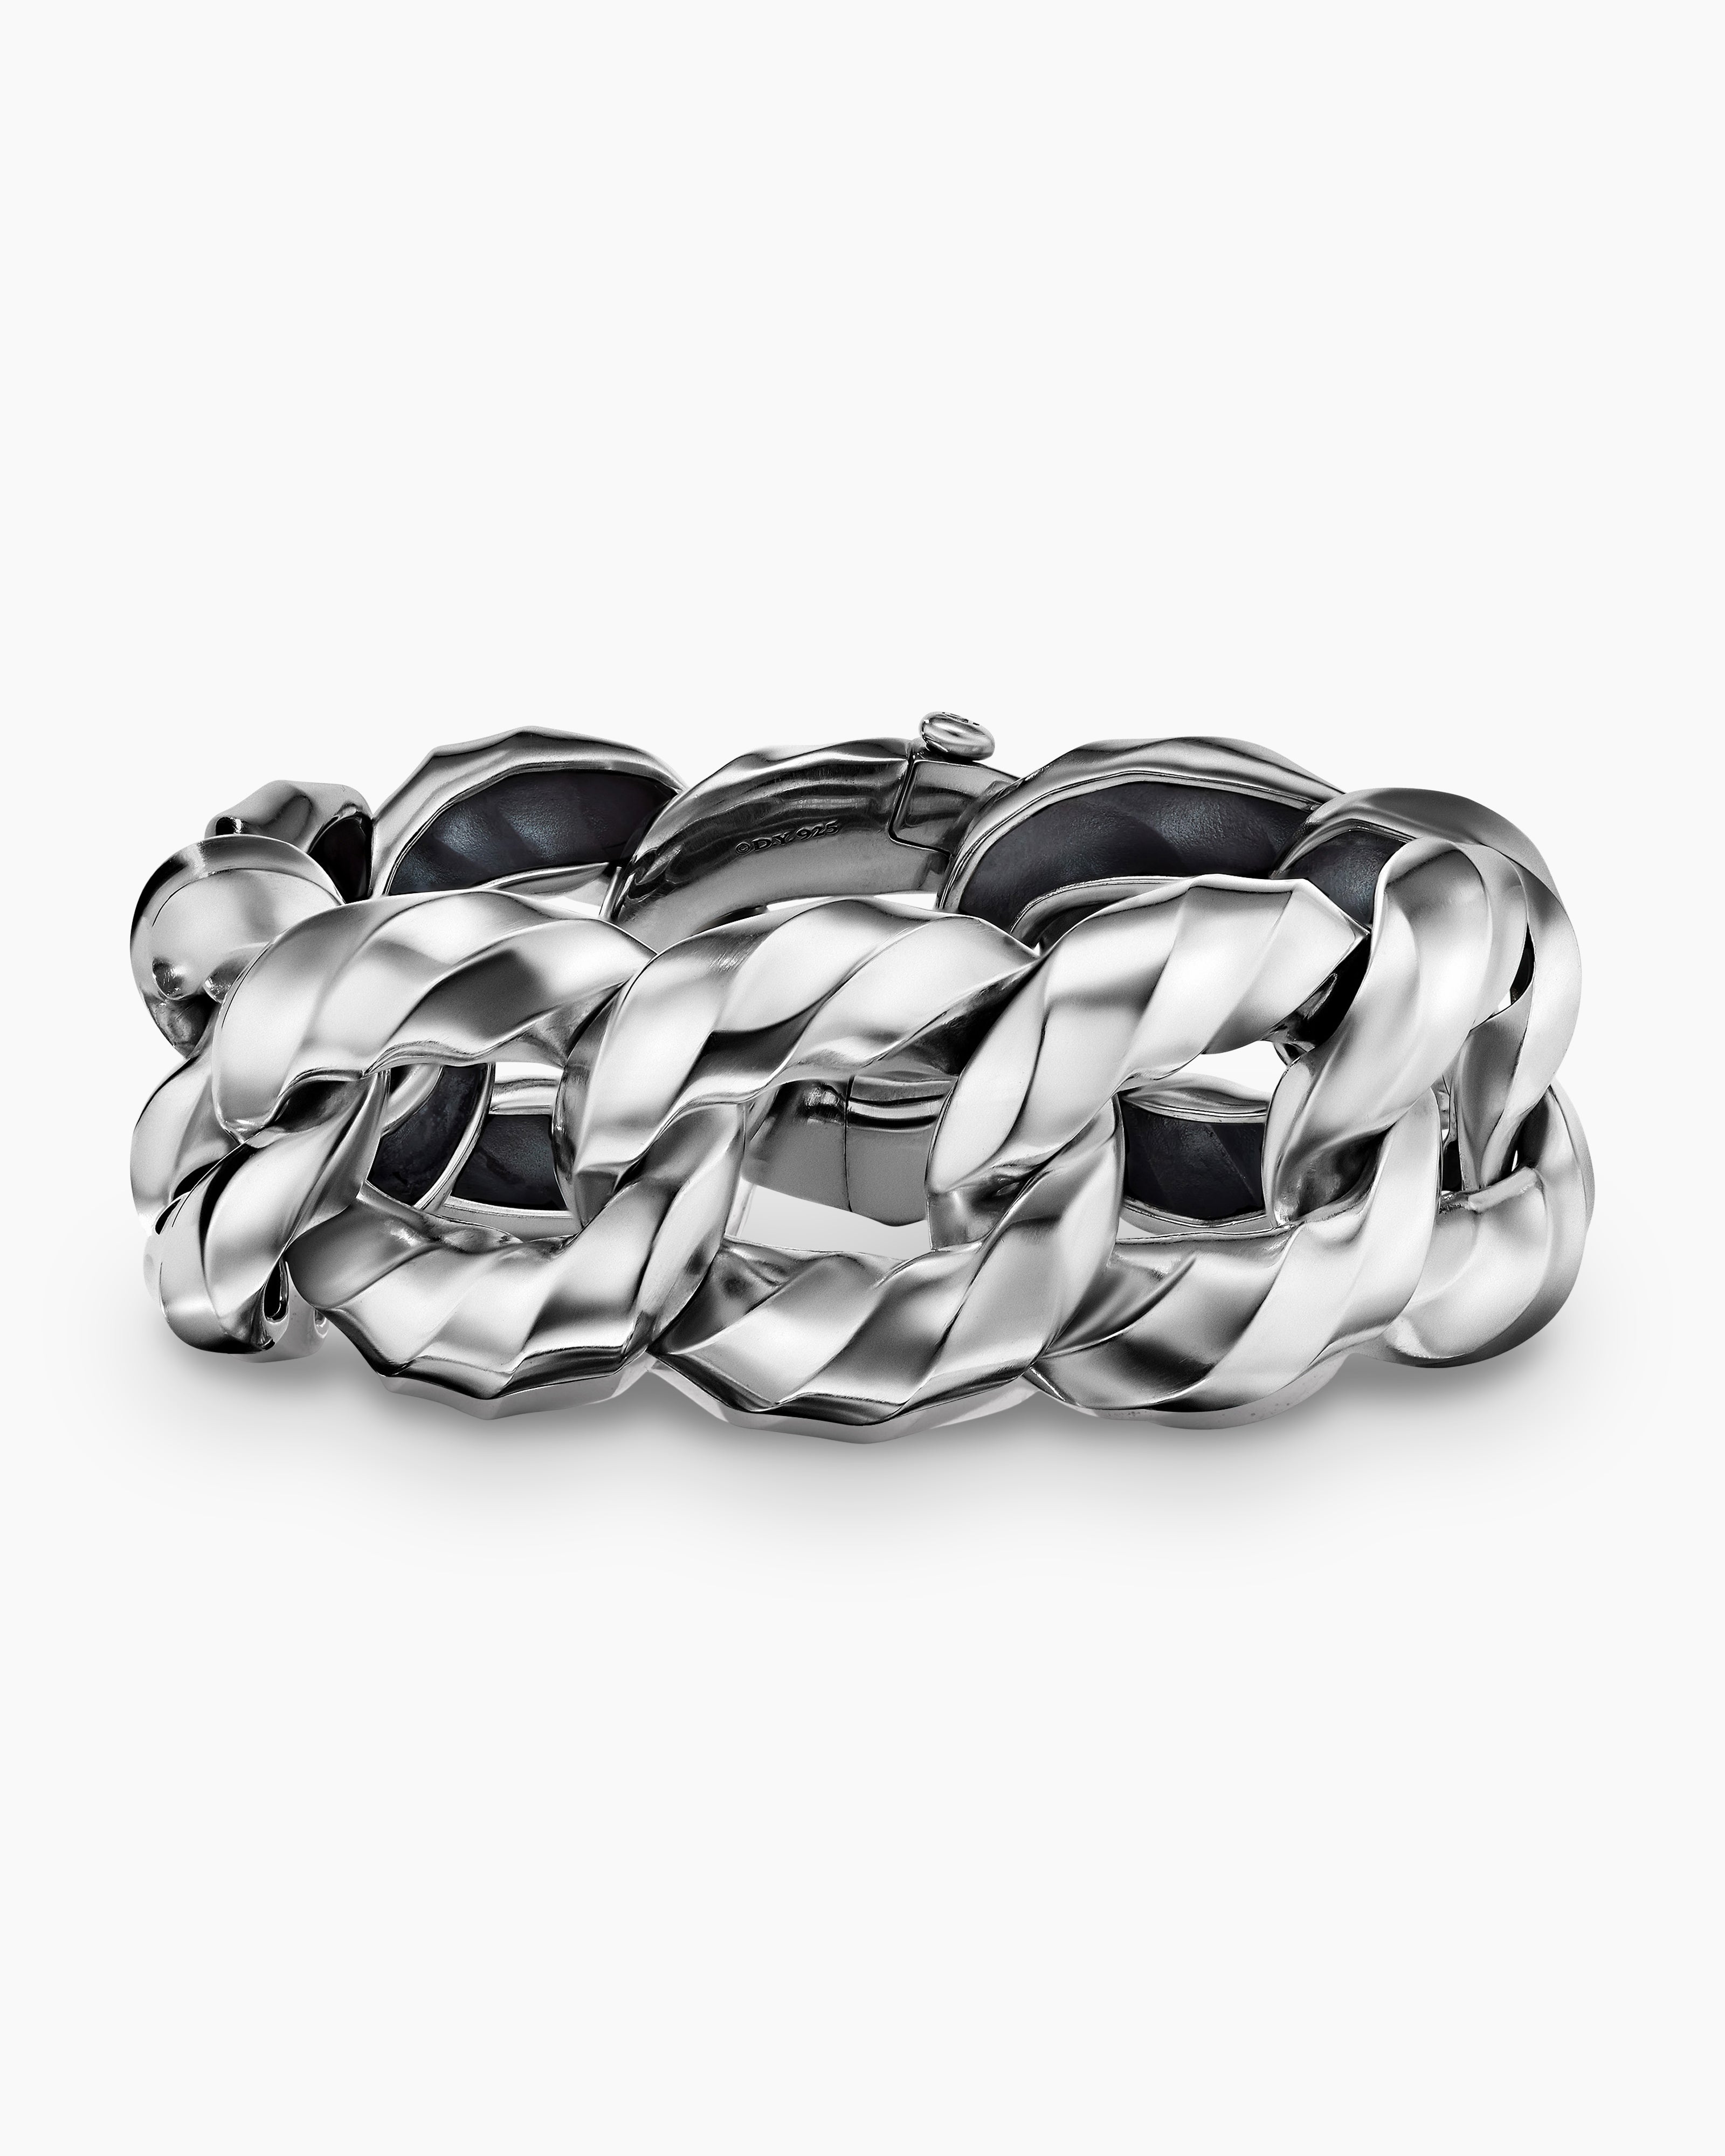 David Yurman Men's Curb Chain Bracelet